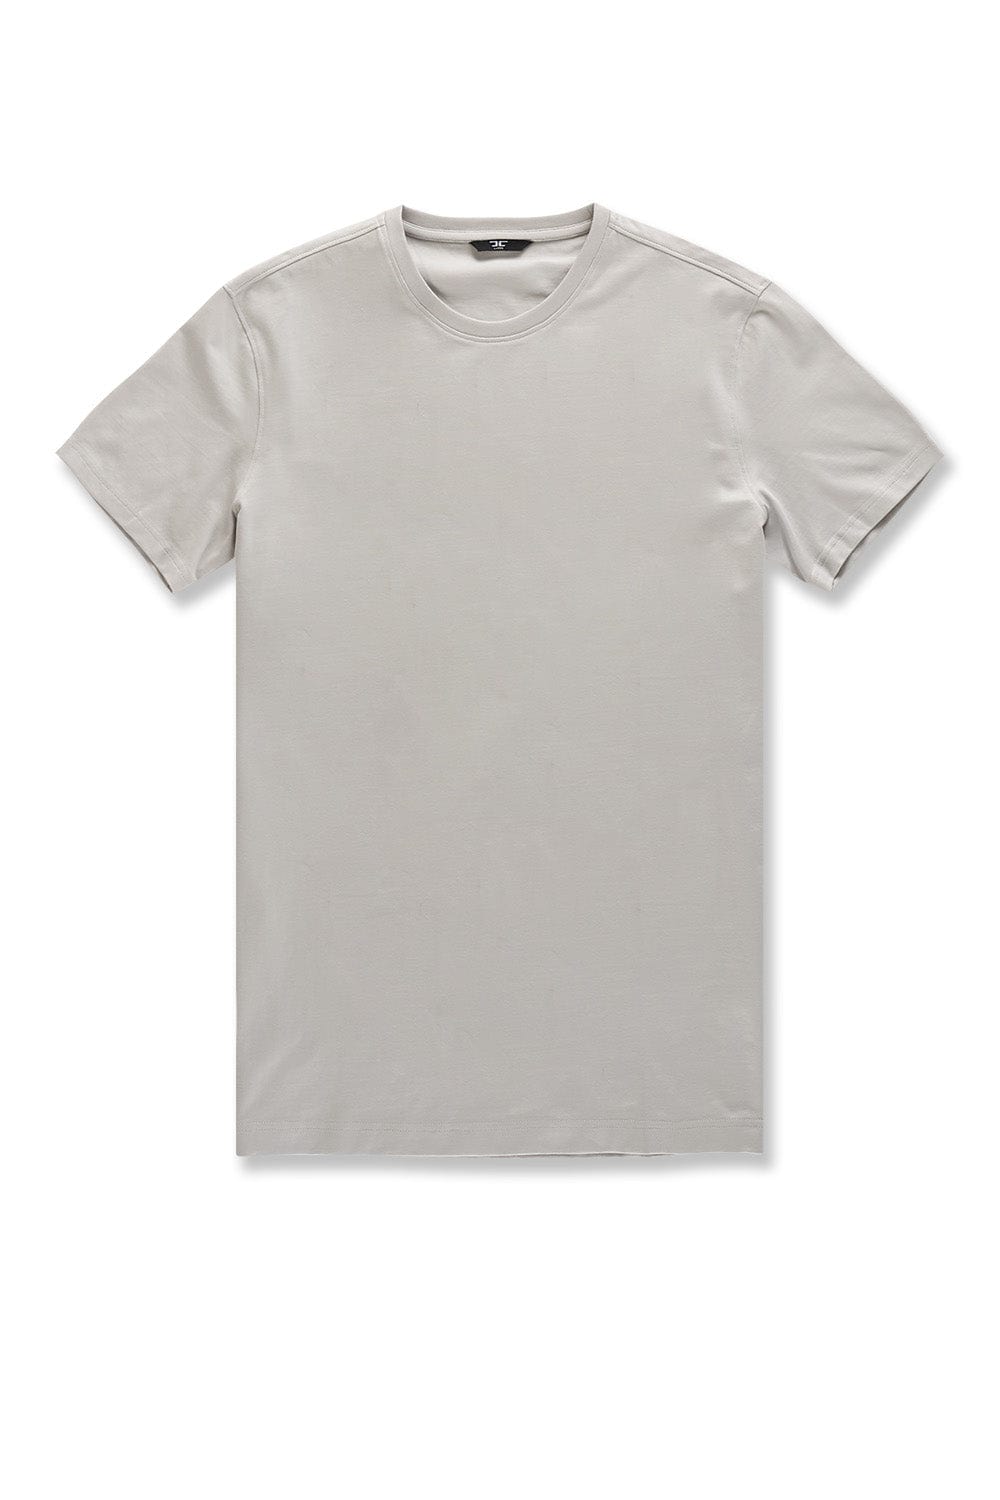 JC Big Men Big Men's Premium Crewneck T-Shirt (Name Your Price) Cement / 4XL